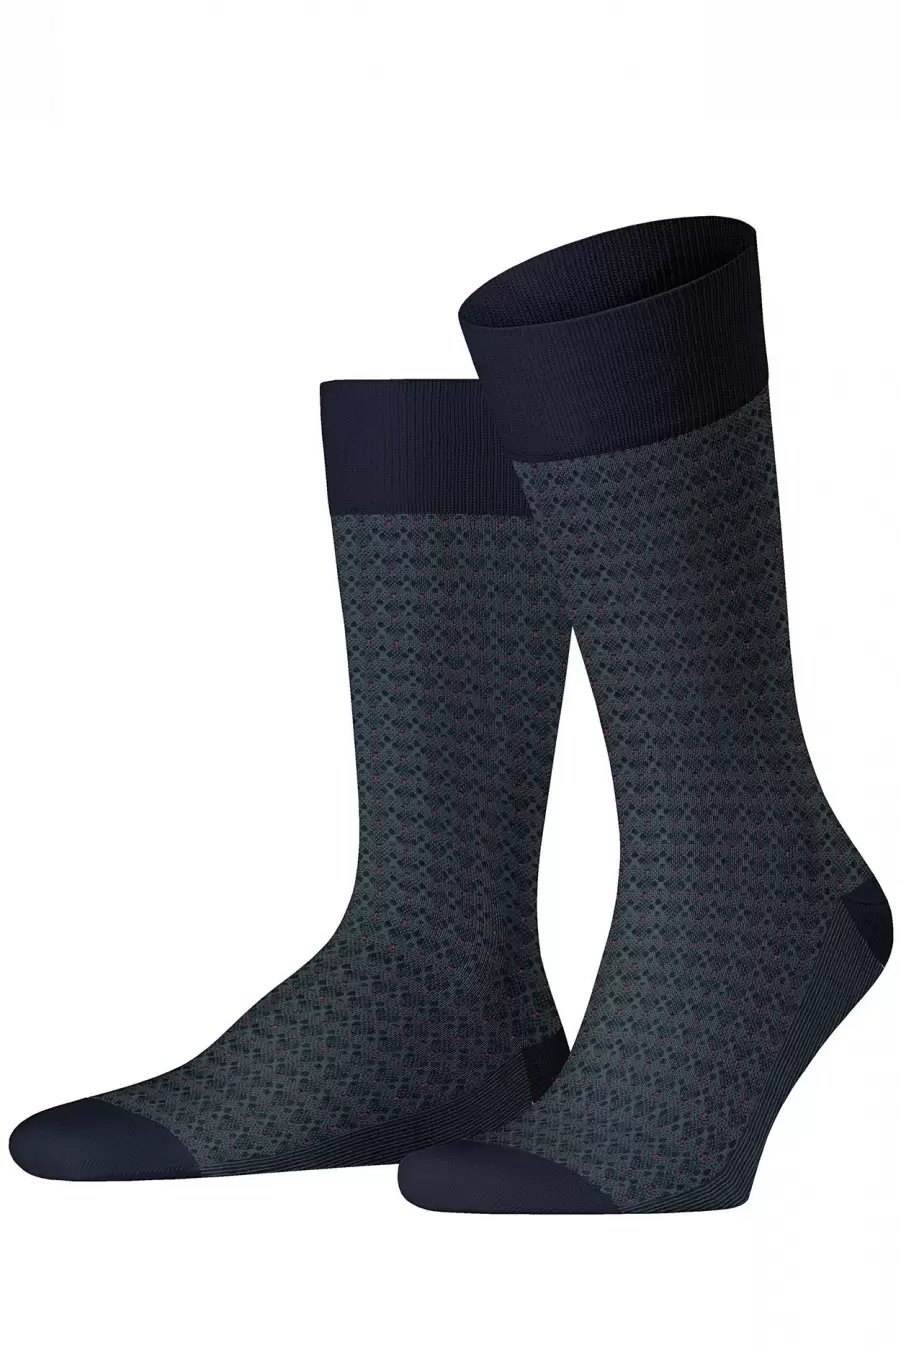 Falke 12432 Neutral Connection, мужские носки (изображение 1)